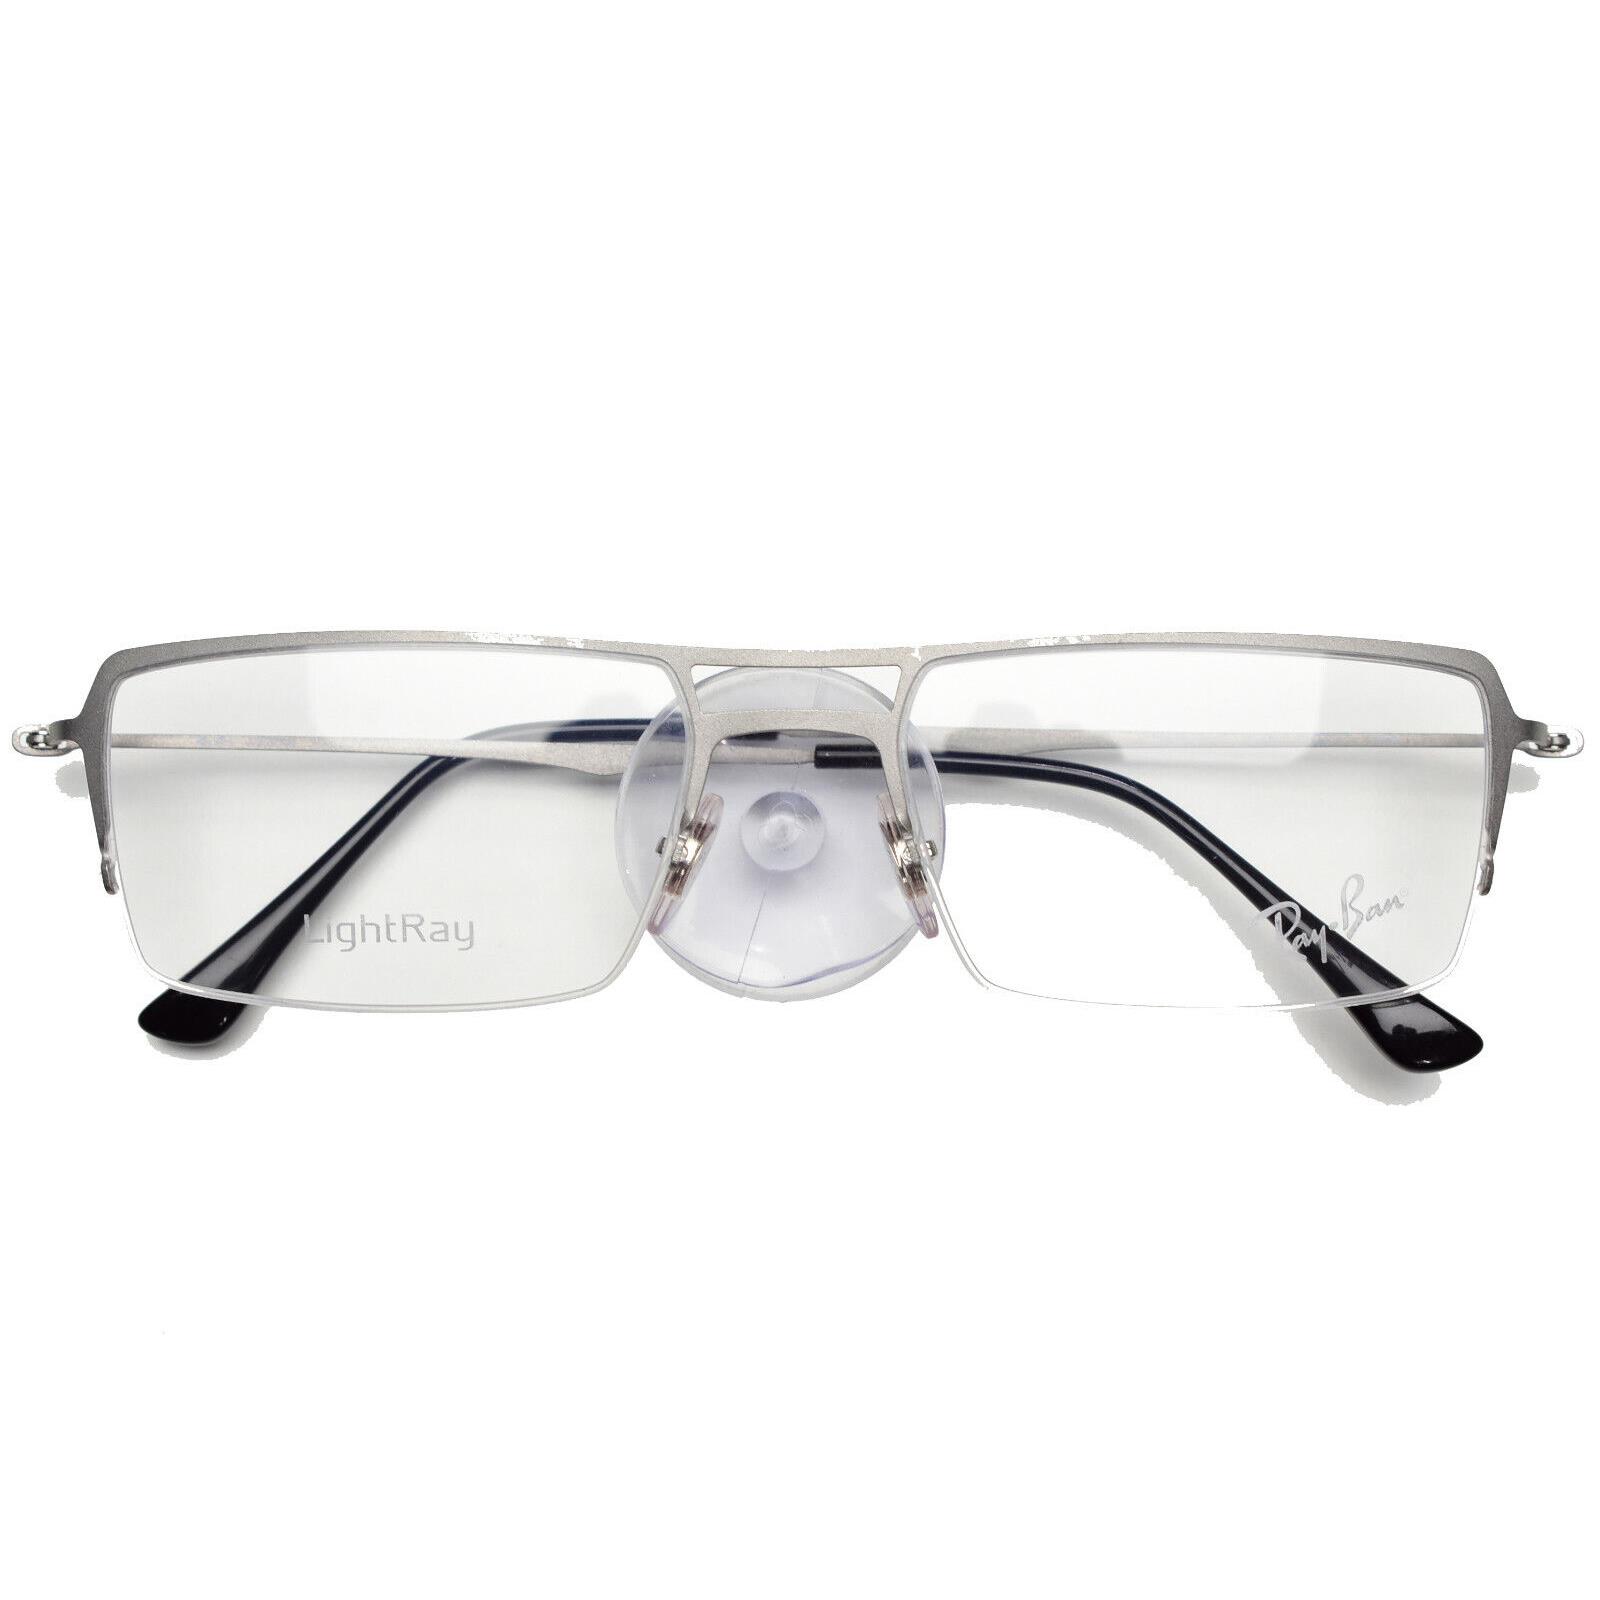 Ray-ban 8713 1128 Lightray Light Gray Eyeglasses Frames Only 53-17-140 - Light Gray , Light Gray Frame